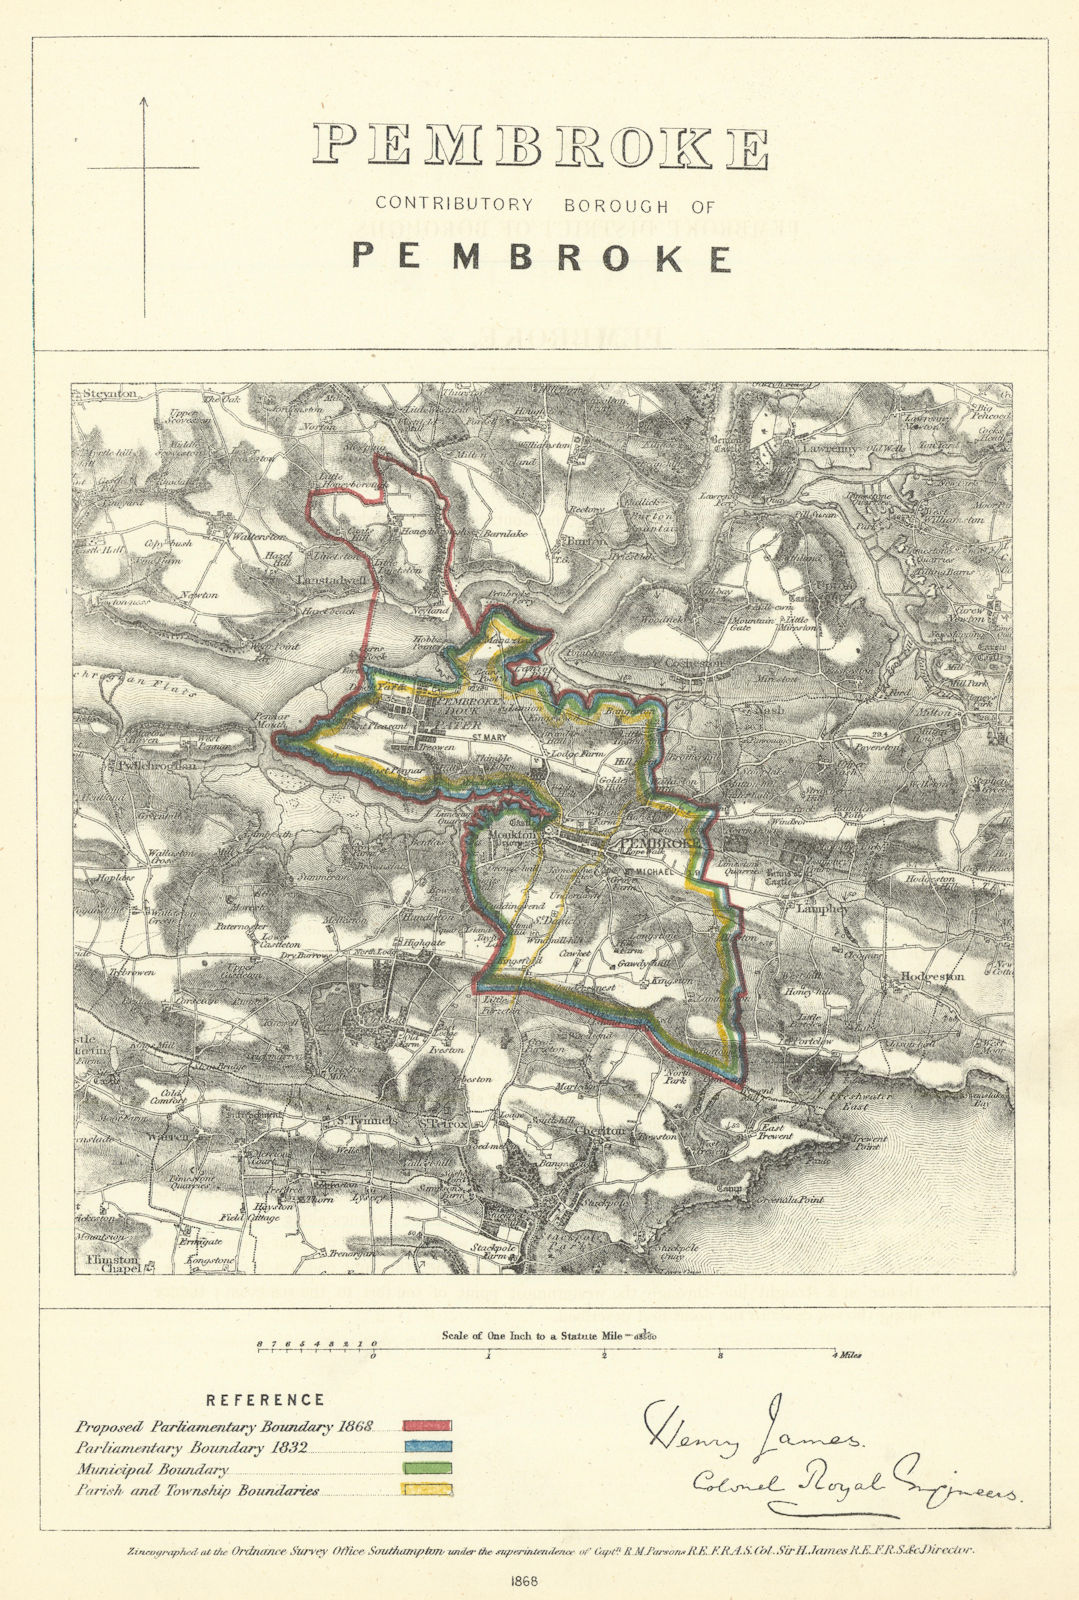 Associate Product Pembroke Contributory Borough of Pembroke. JAMES. Boundary Commission 1868 map